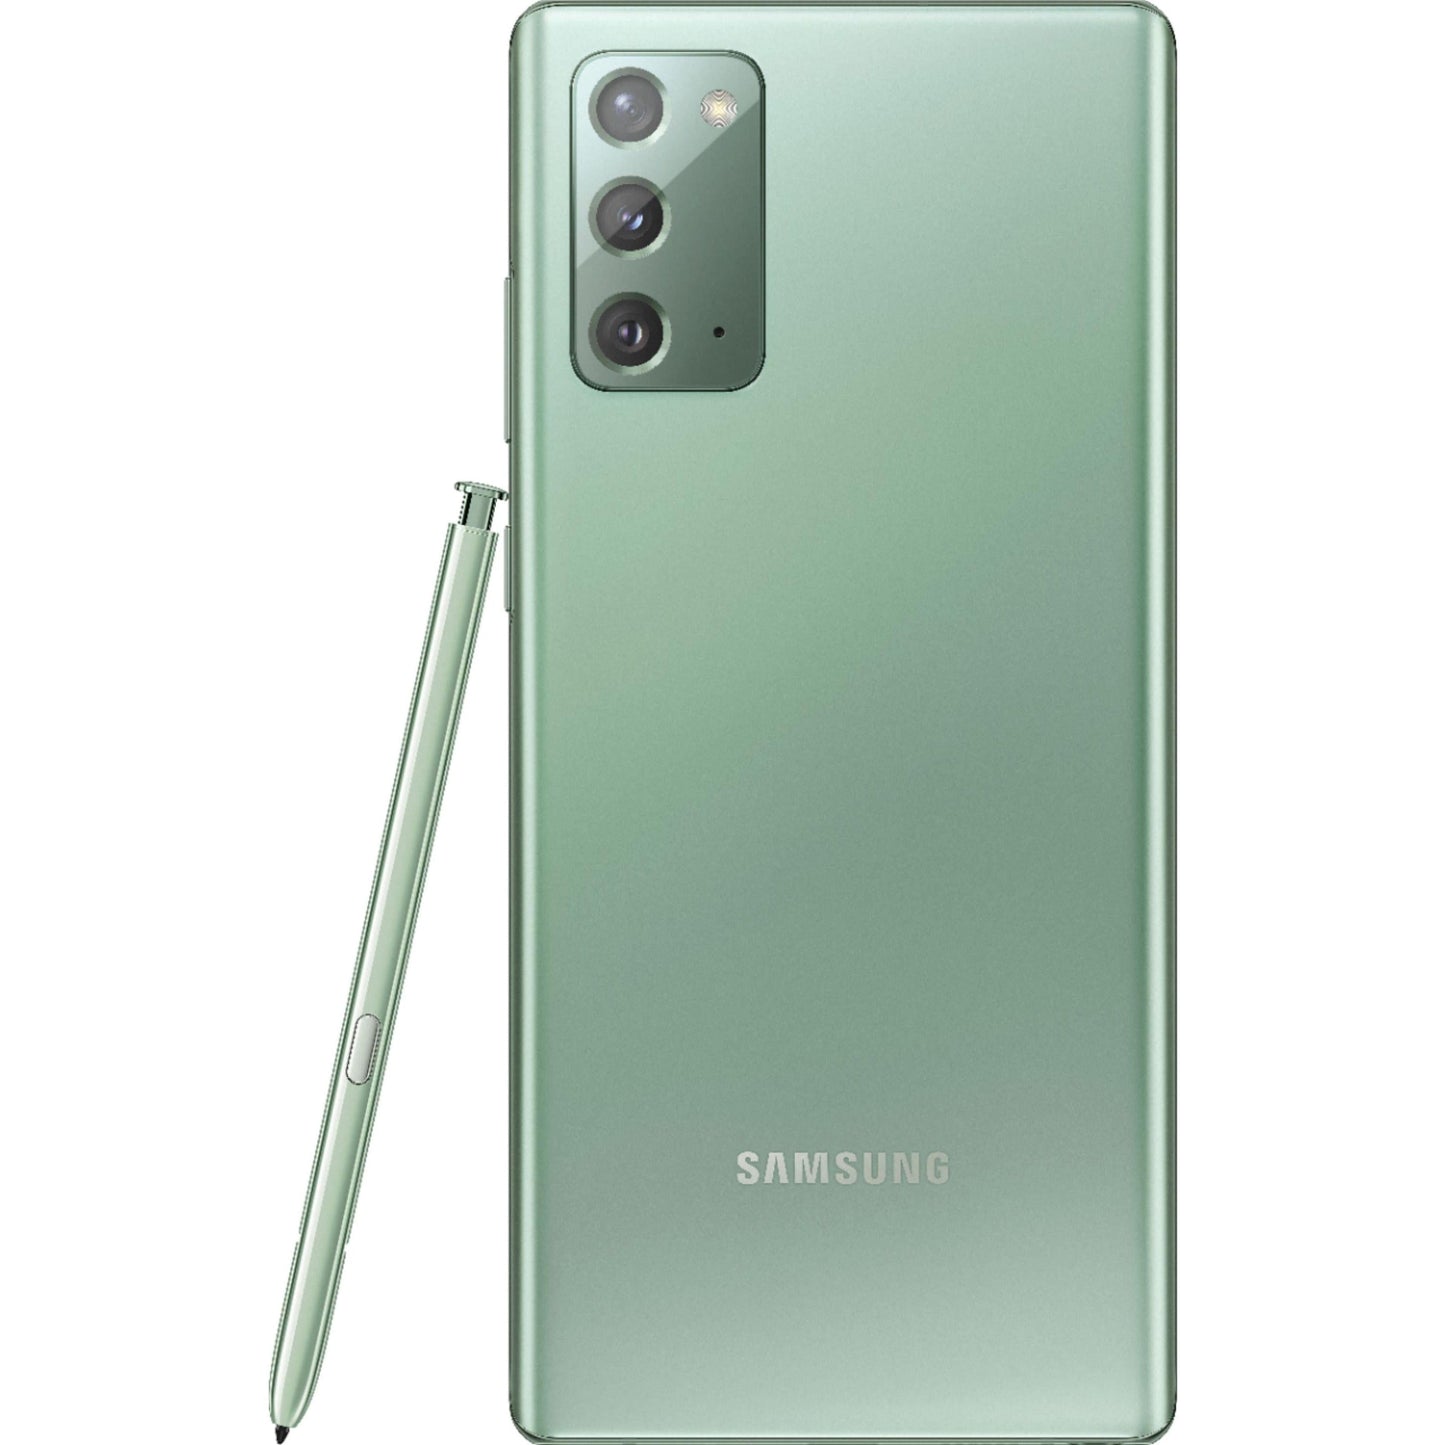 Samsung Galaxy Note20 5G - 128 GB - Mystic Green - US mobile